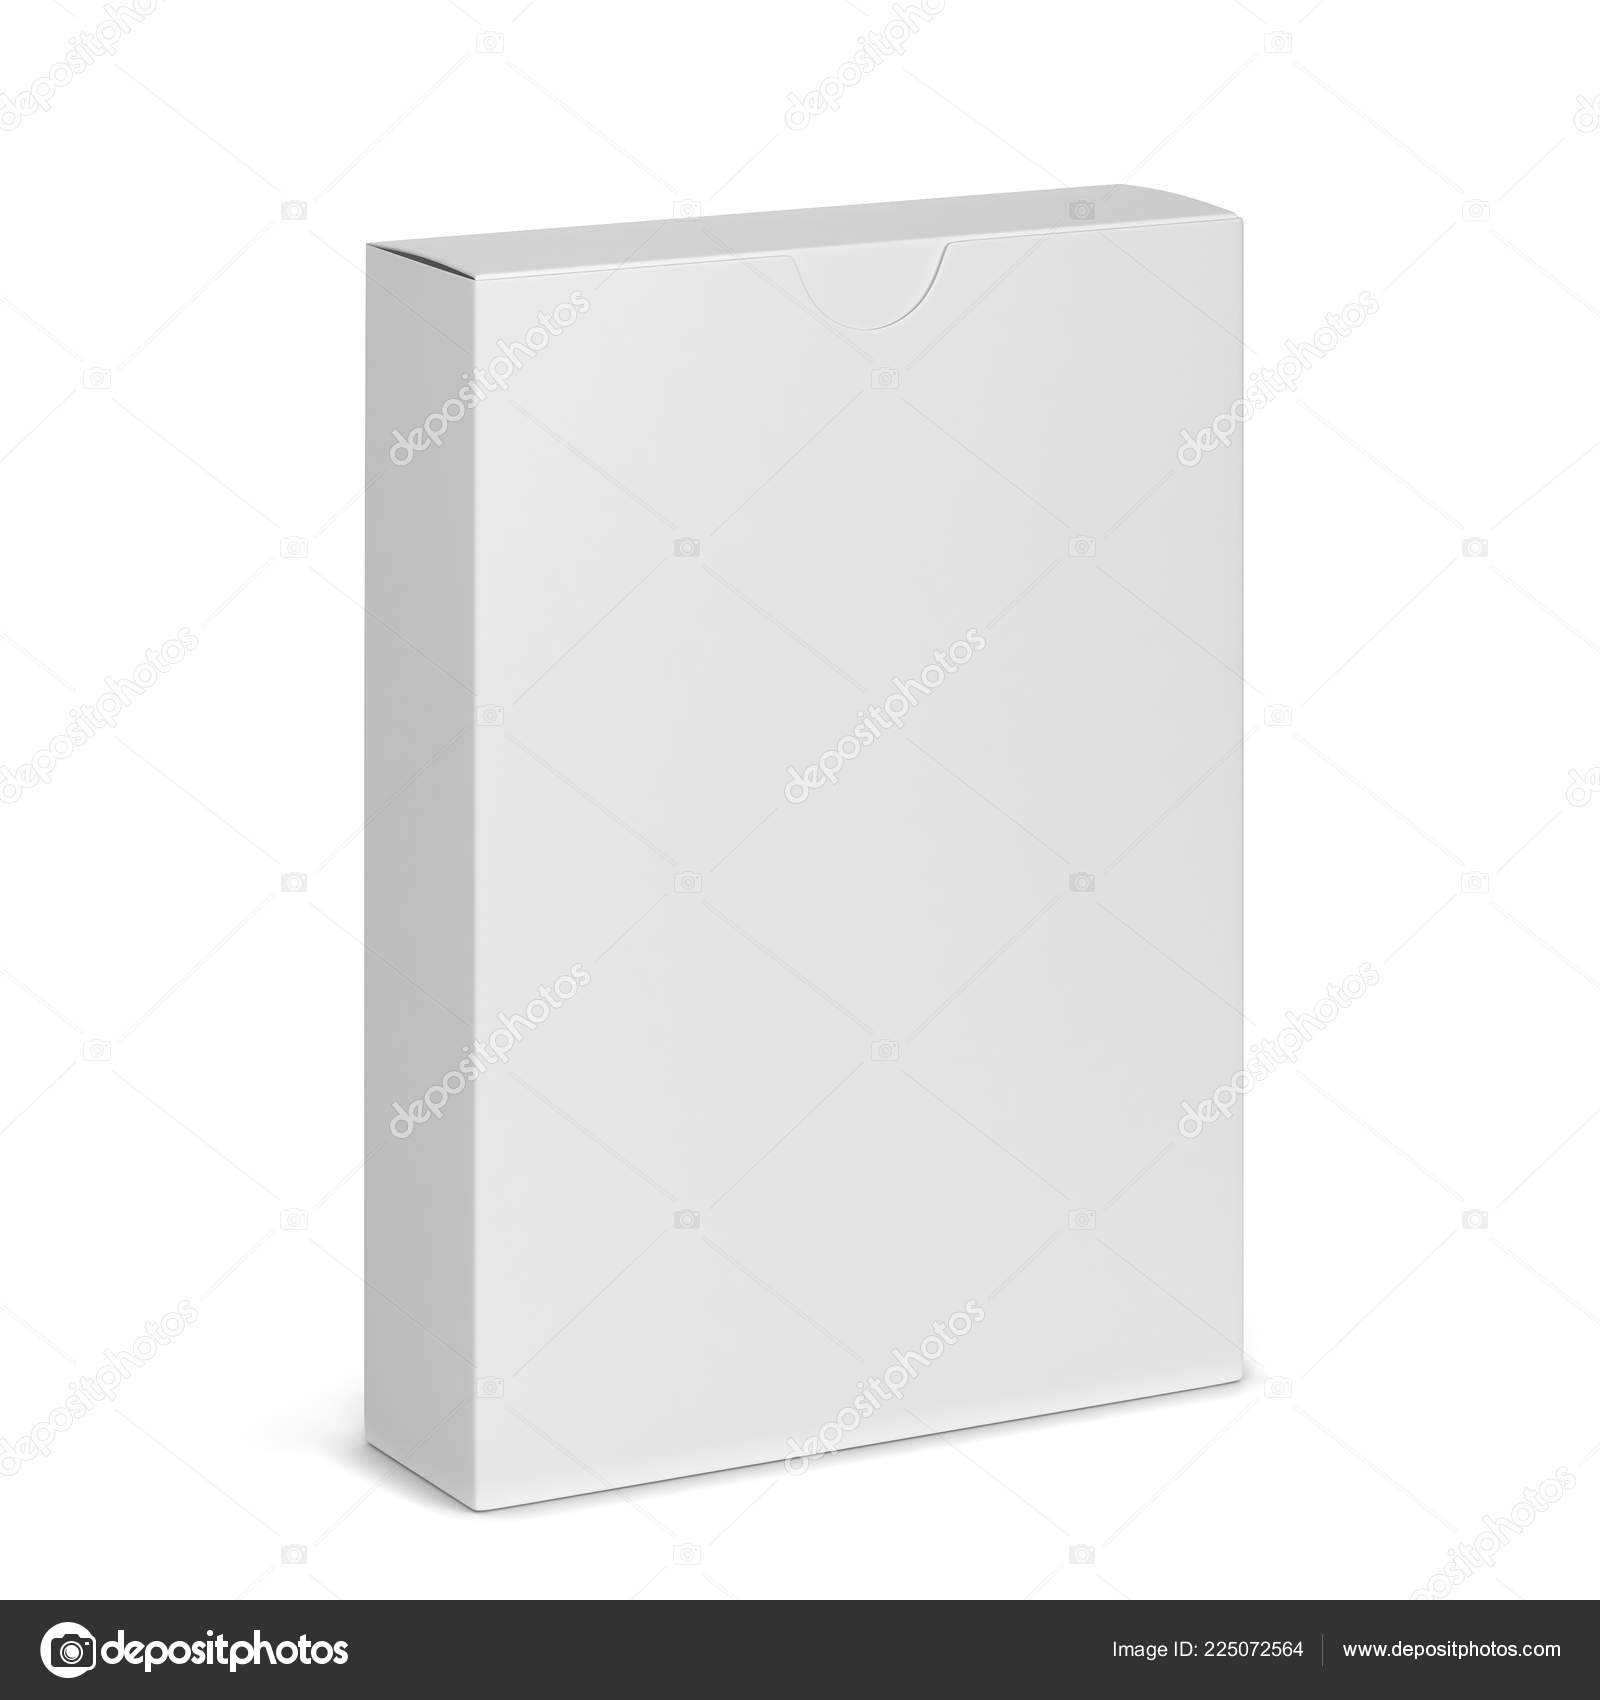 Download Blank Box Playing Cards Mockup Illustration Isolated White Background Royalty Free Photo Stock Image By C Montego 225072564